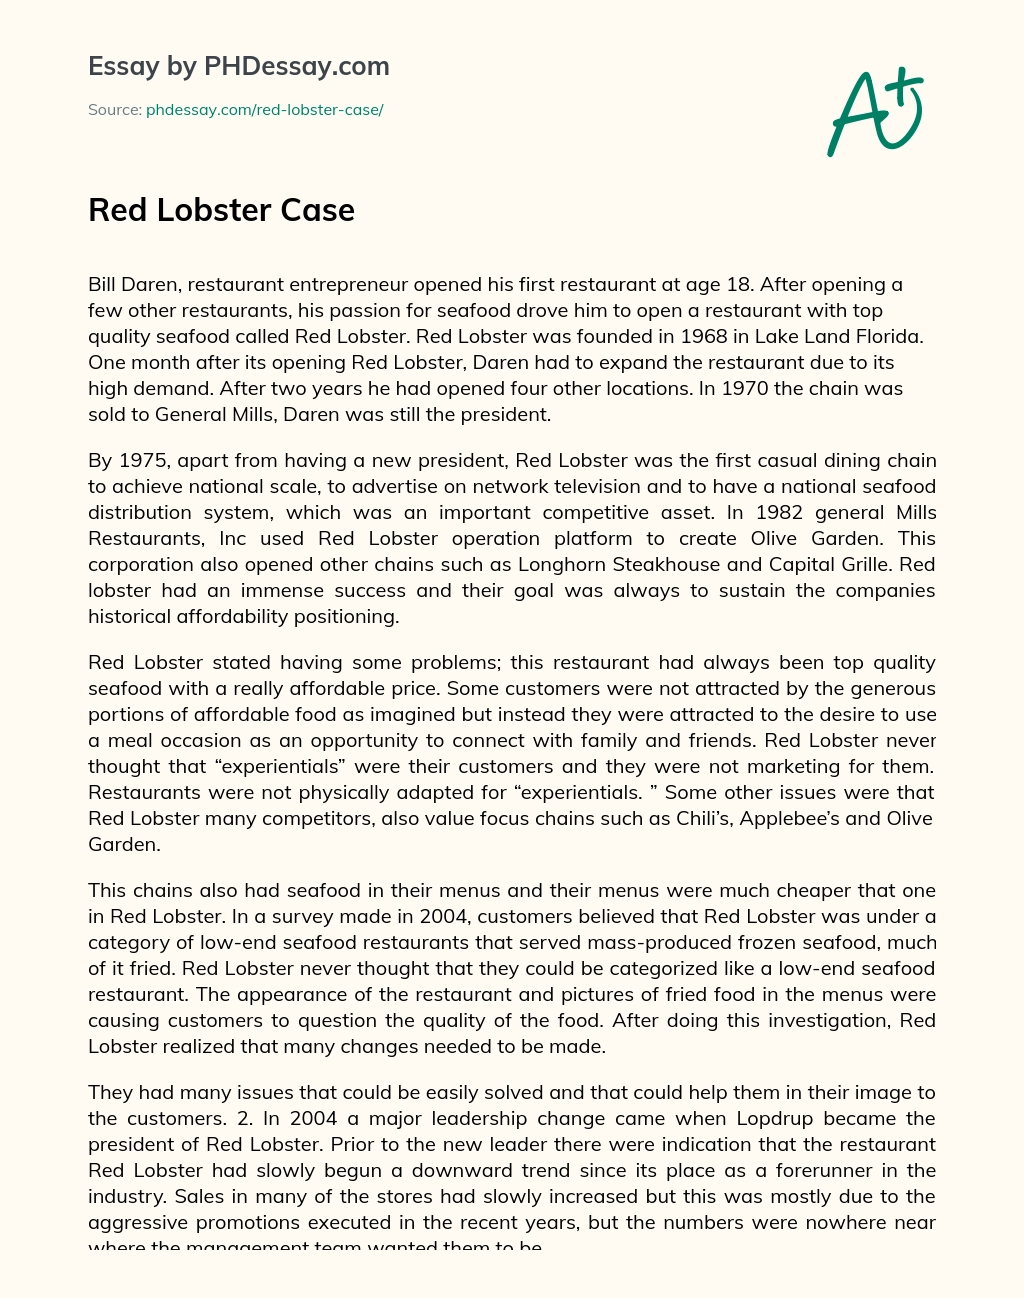 Red Lobster Case essay